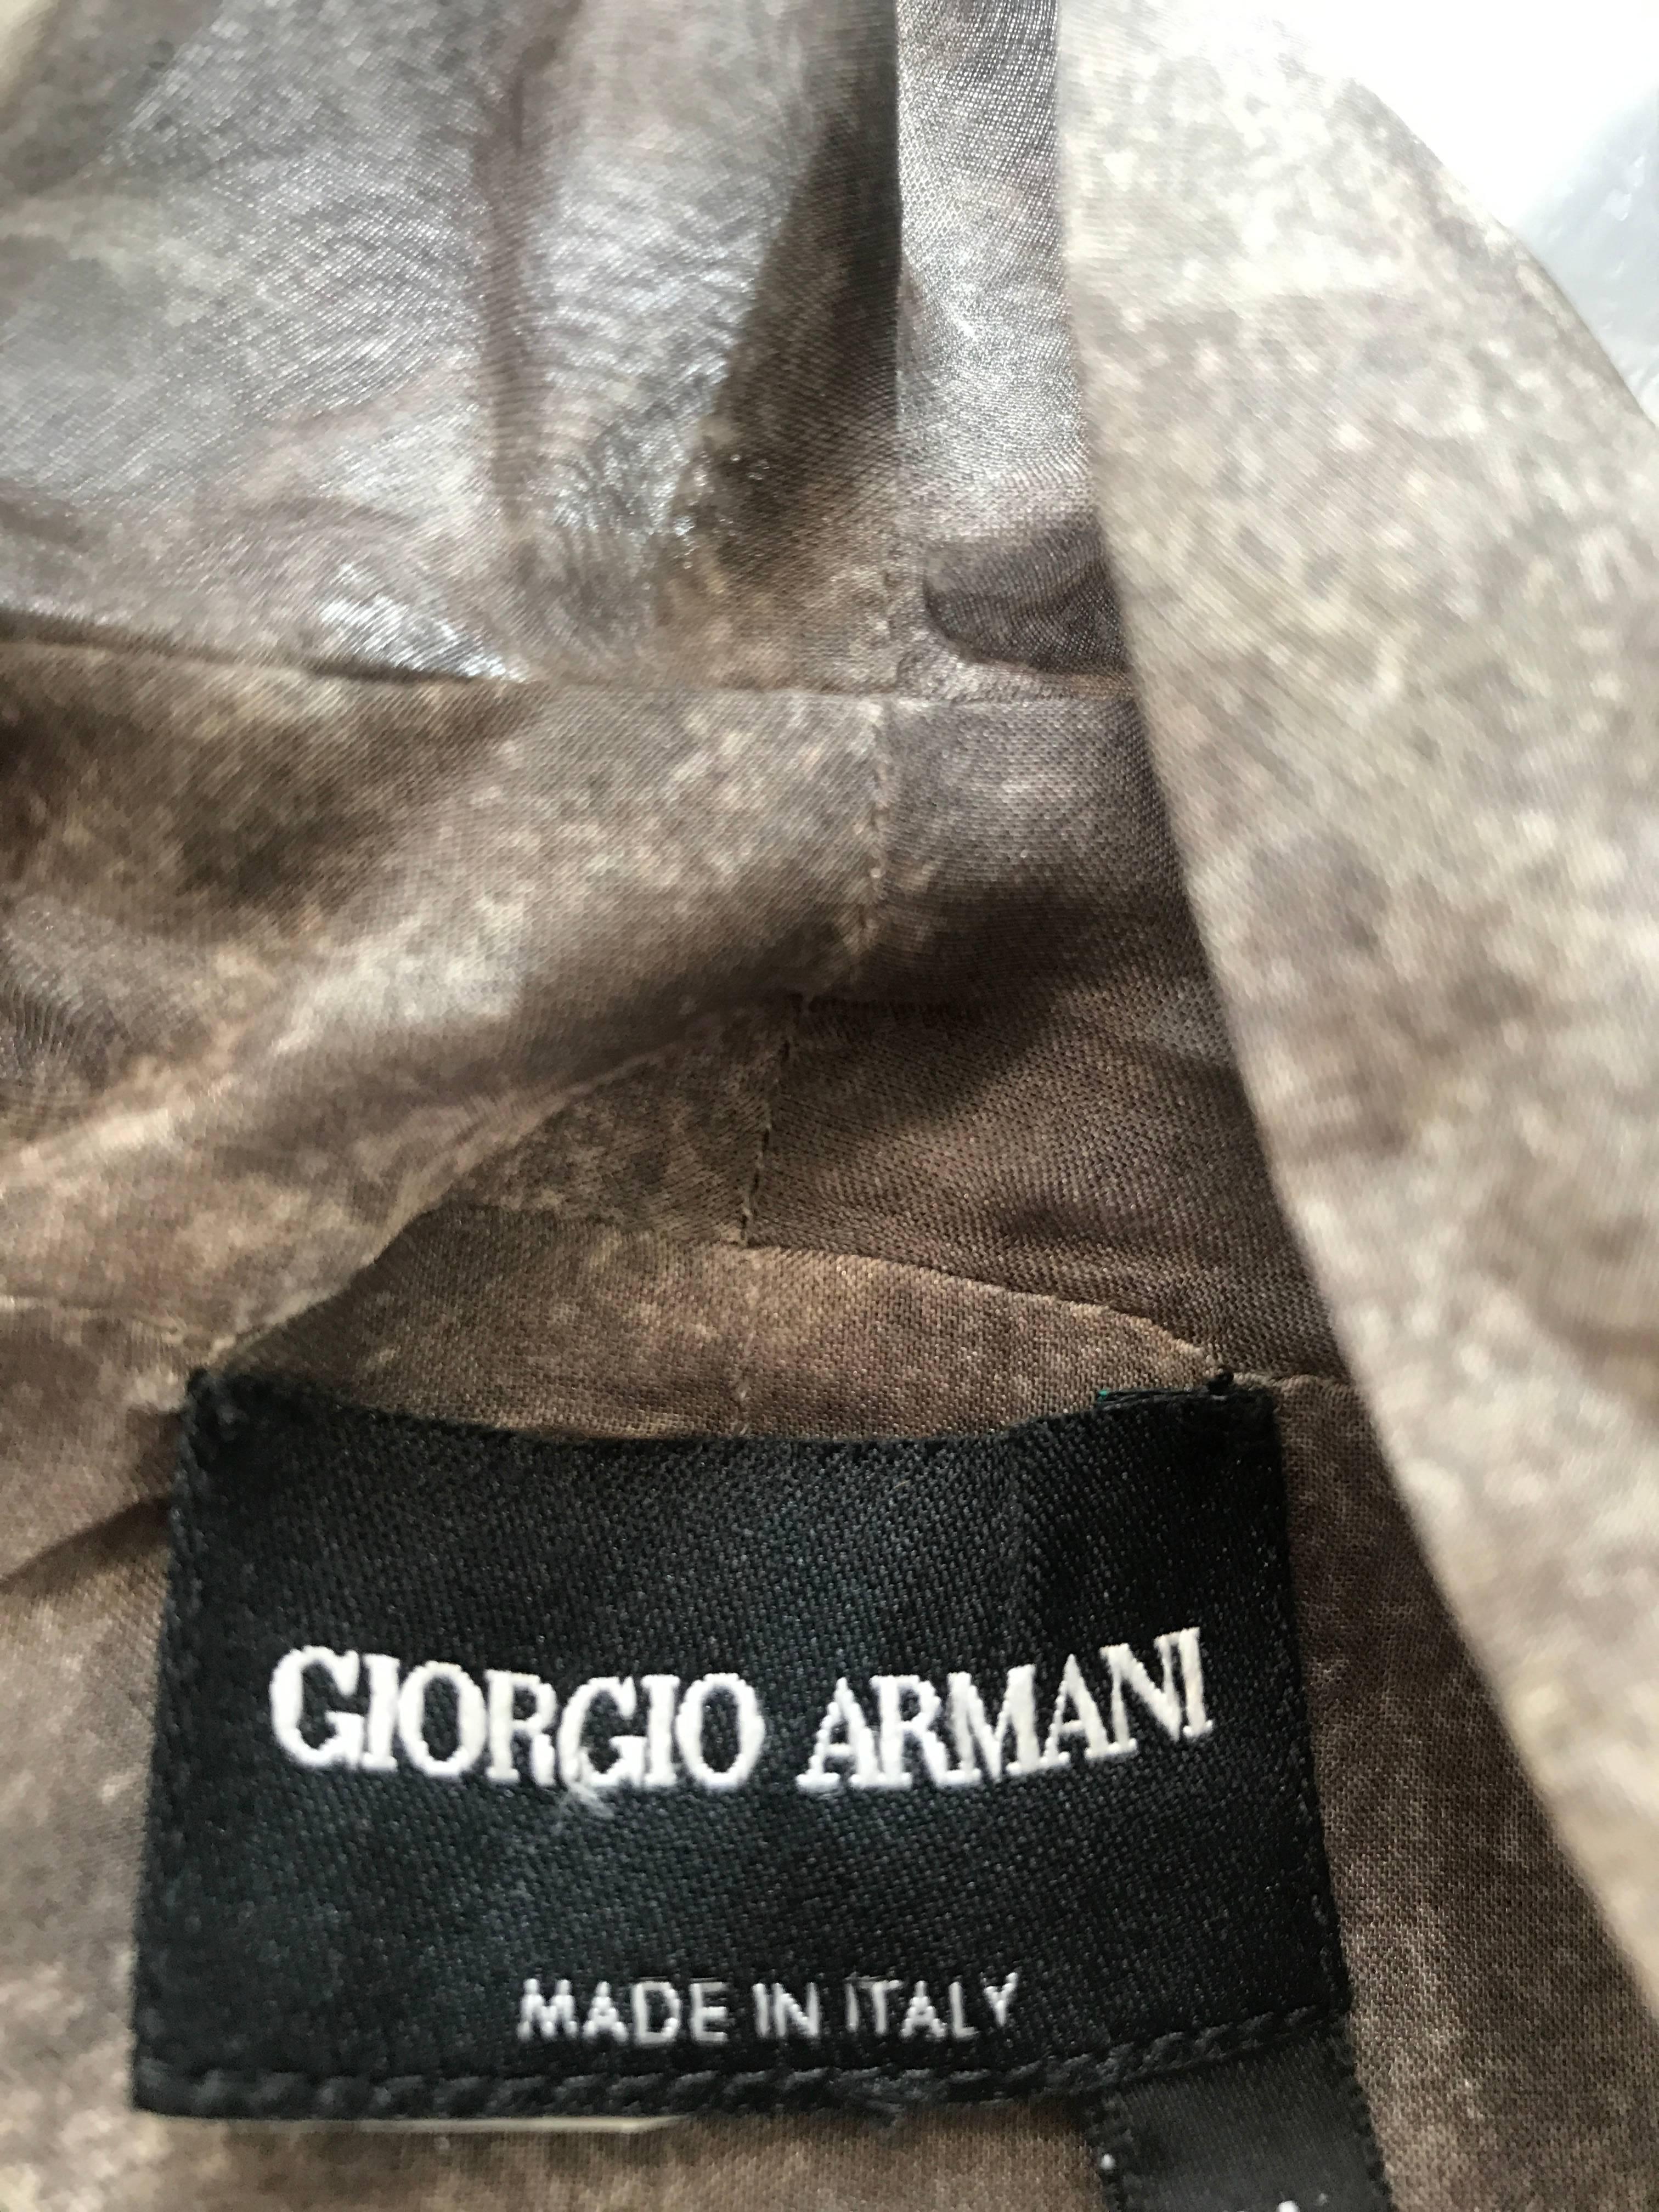 Giorgio Armani 1990s Silver Gunmetal Avant Garde Vintage 90s Silk ...